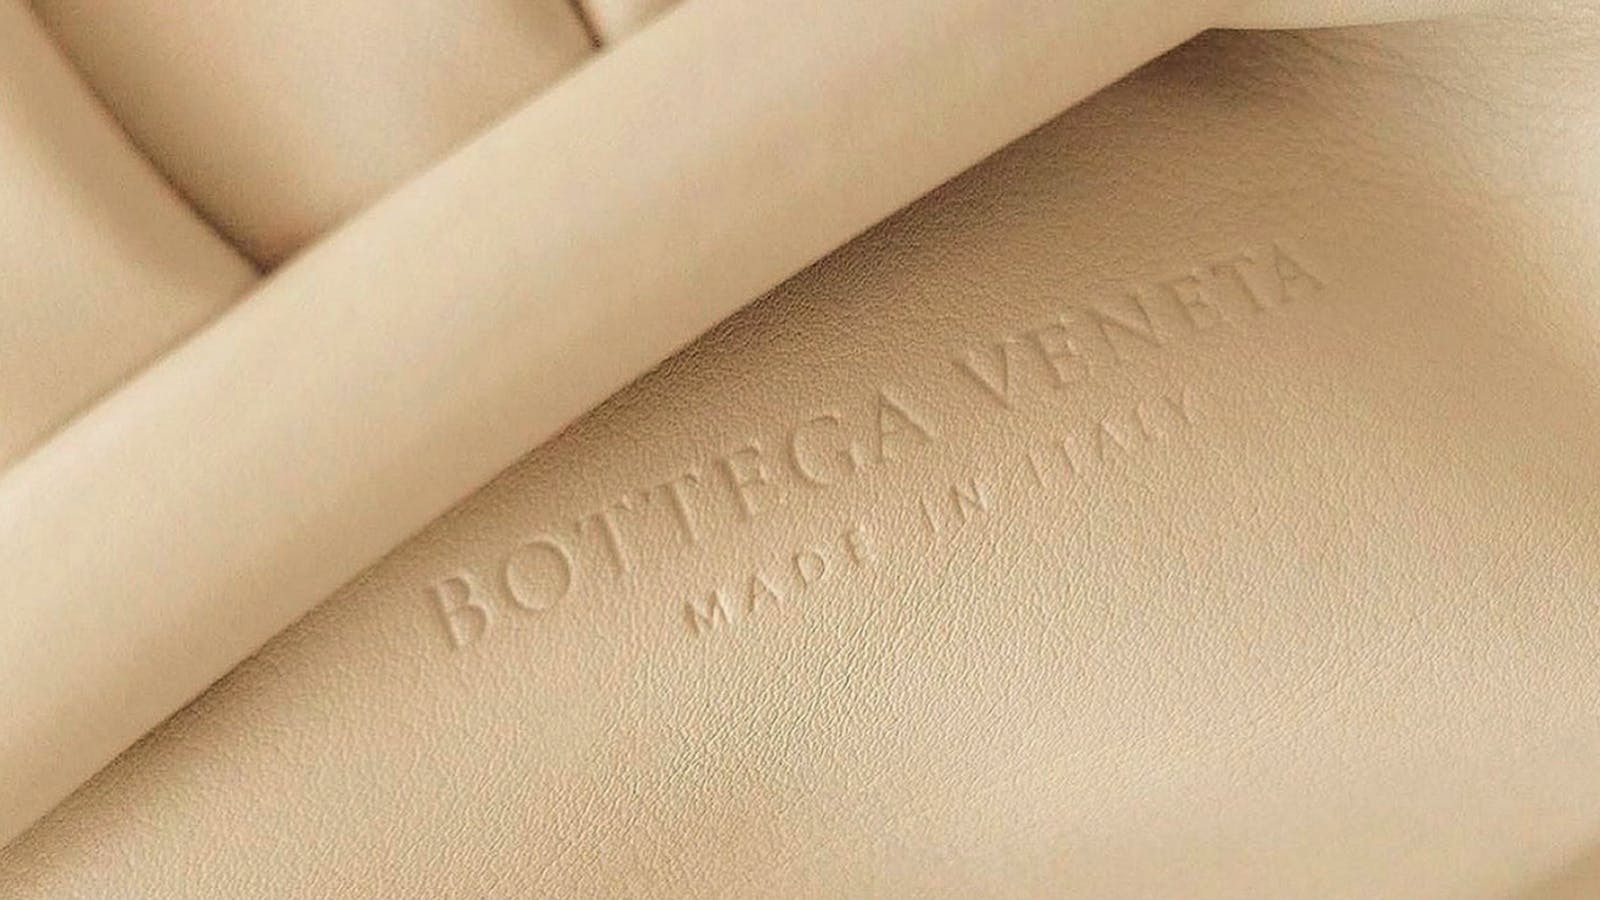 The History And Evolution Of Bottega Veneta - GLAM OBSERVER